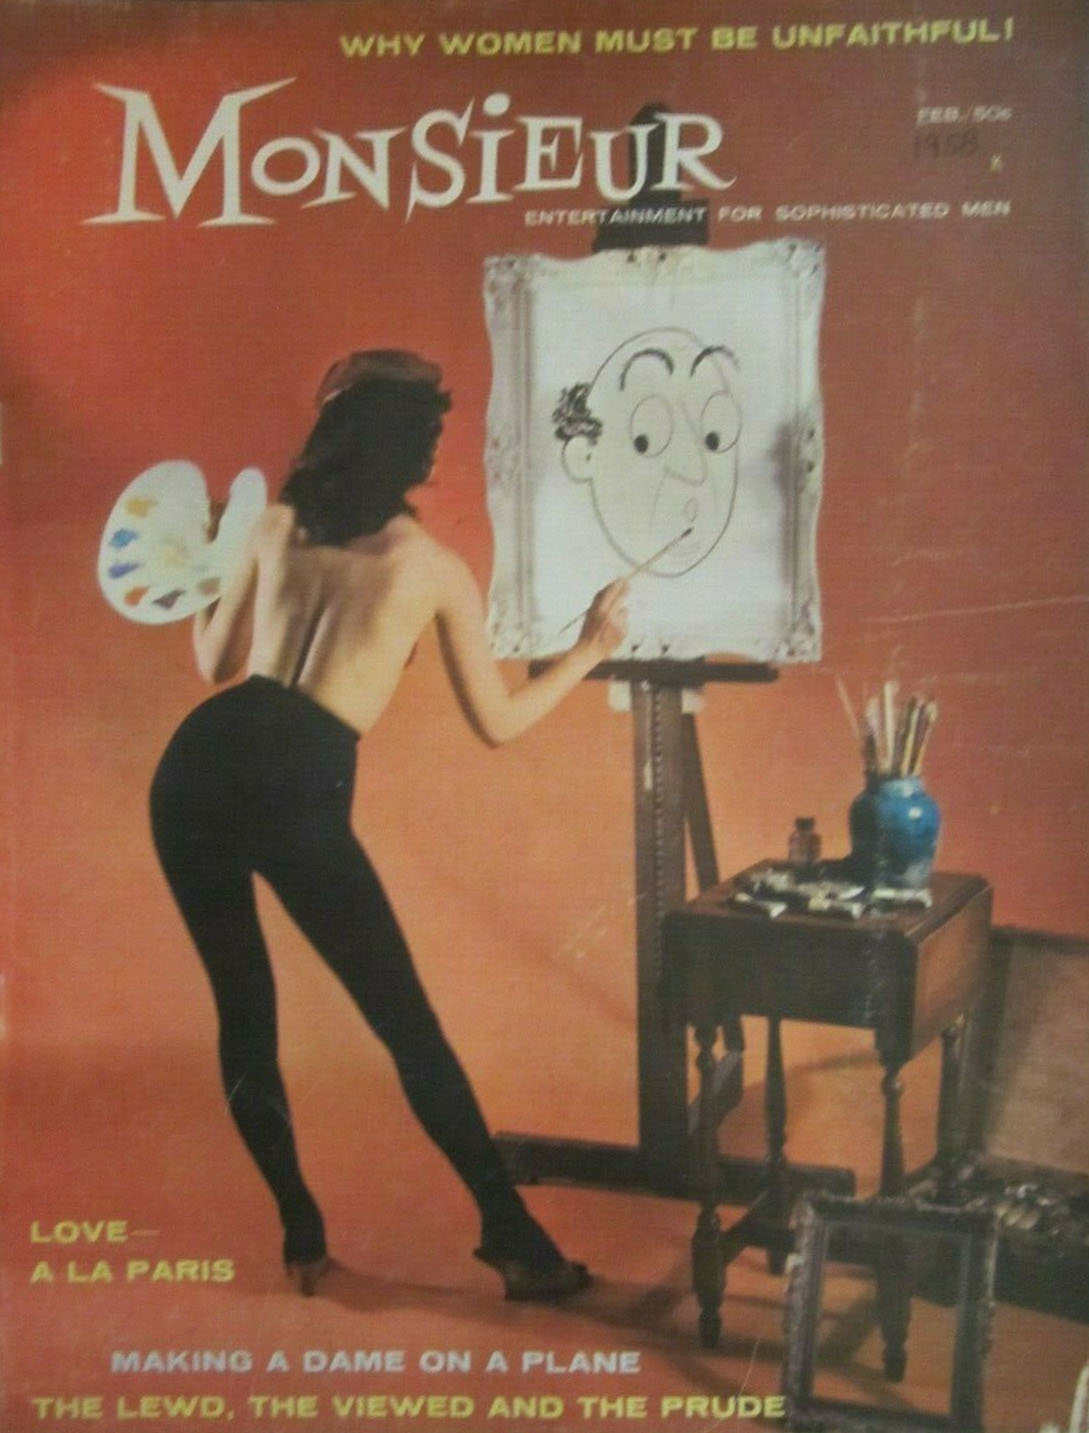 Monsieur Feb 1958 magazine reviews